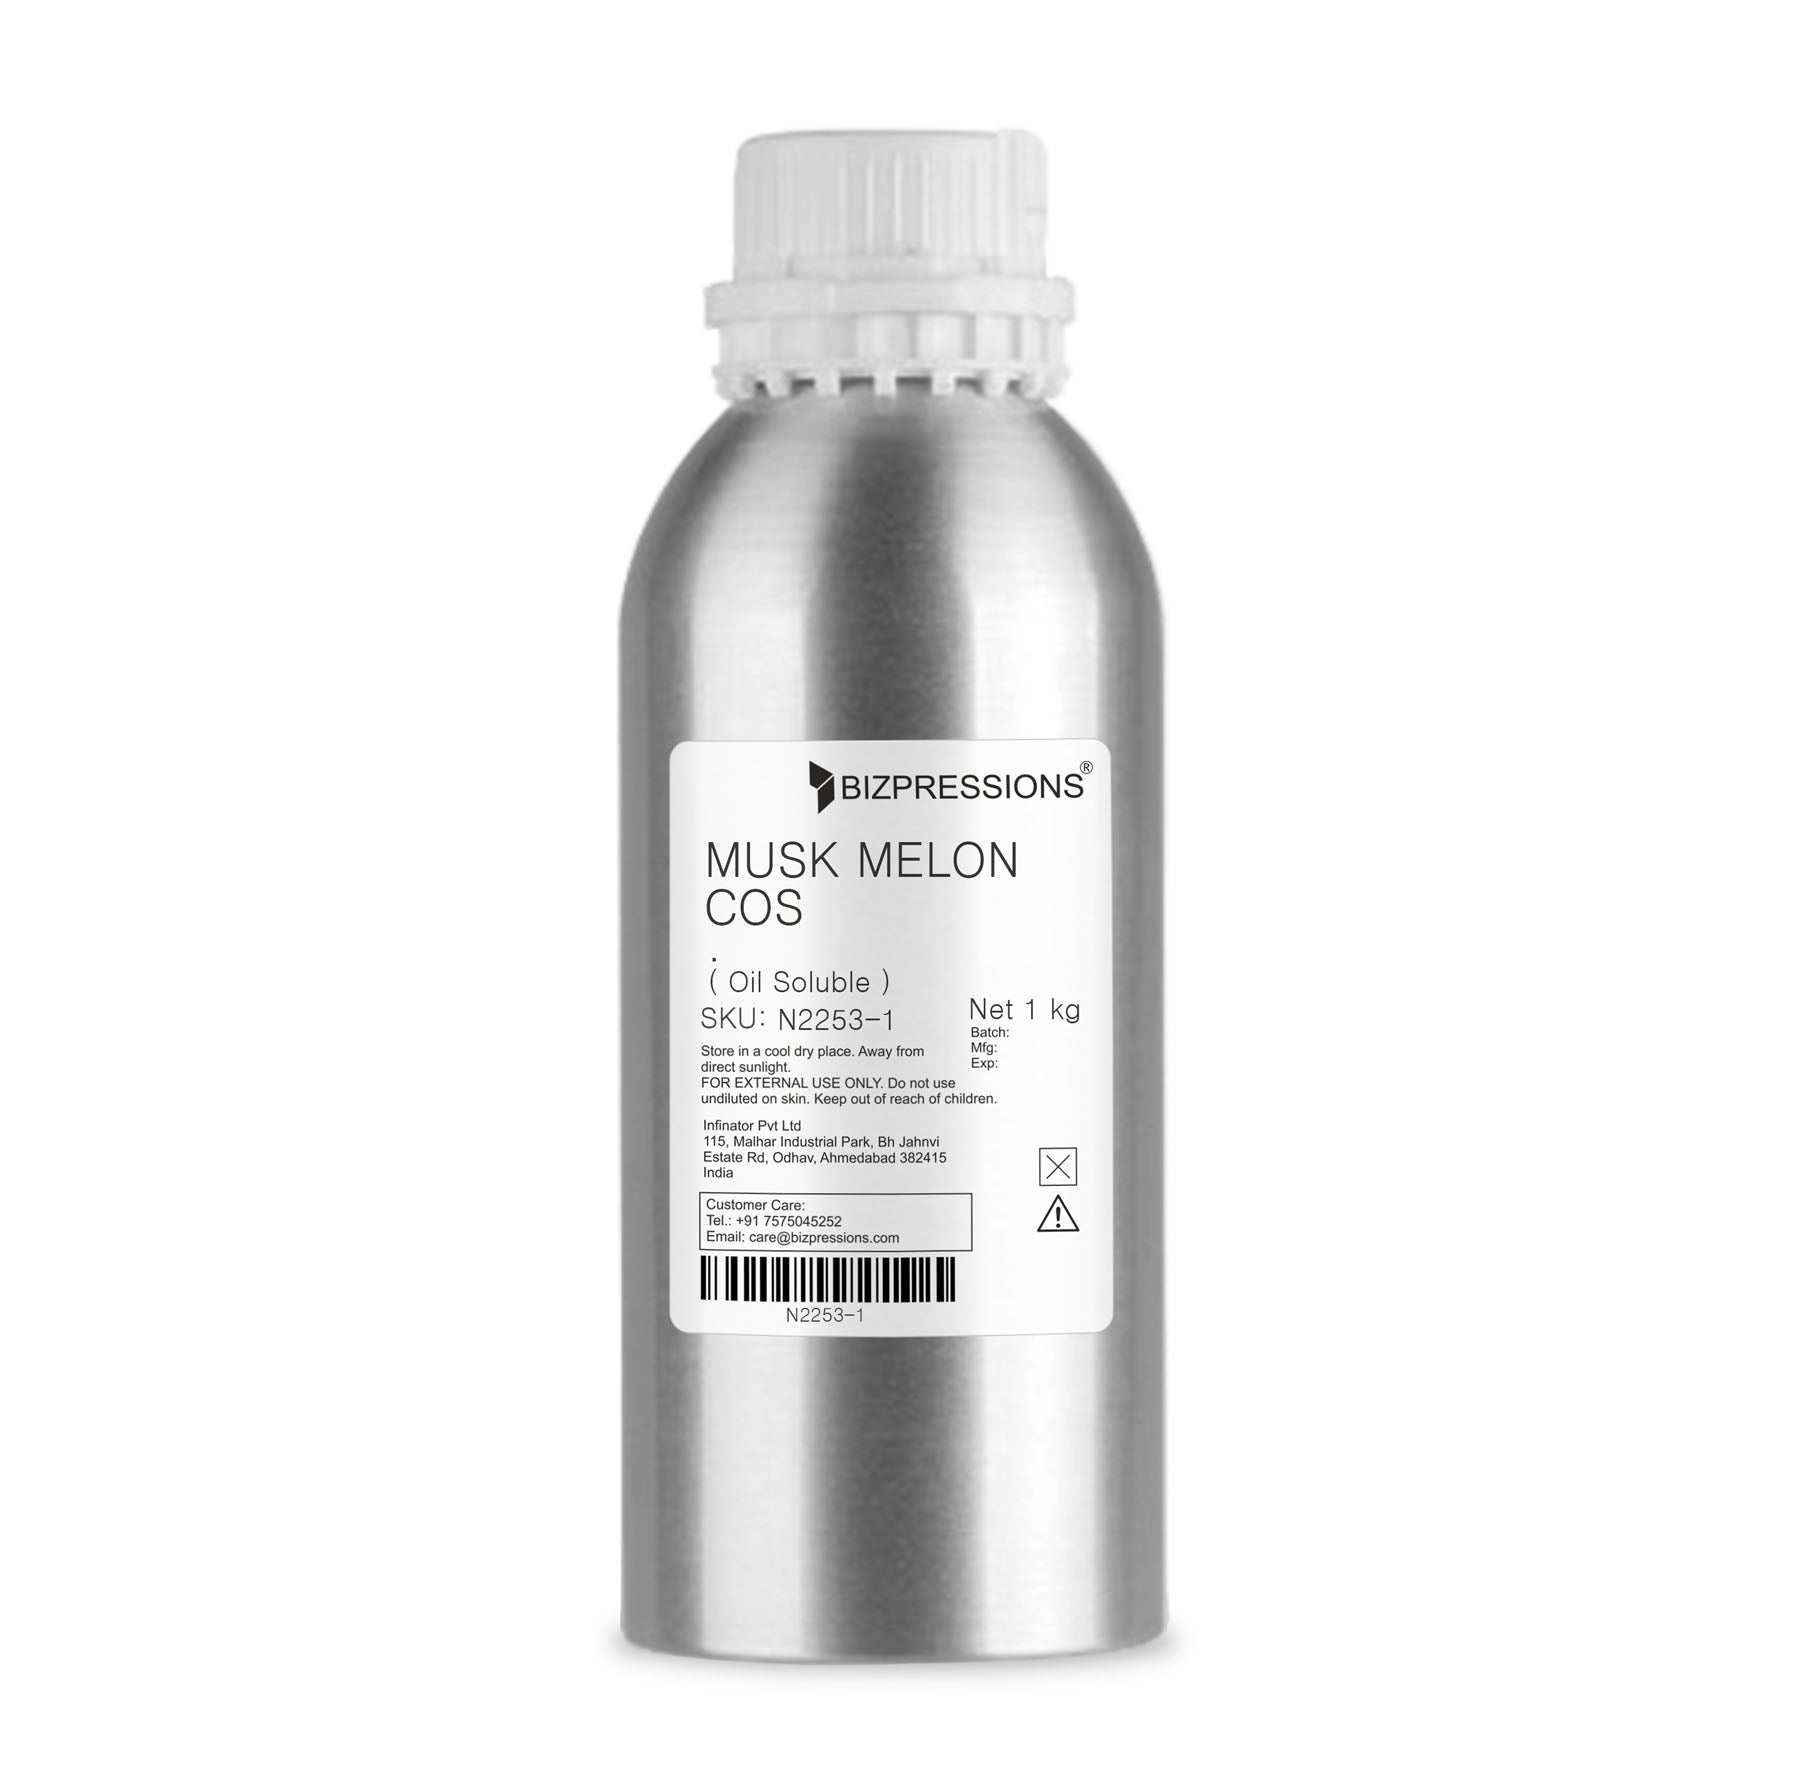 MUSK MELON COS - Fragrance ( Oil Soluble ) - 1 kg